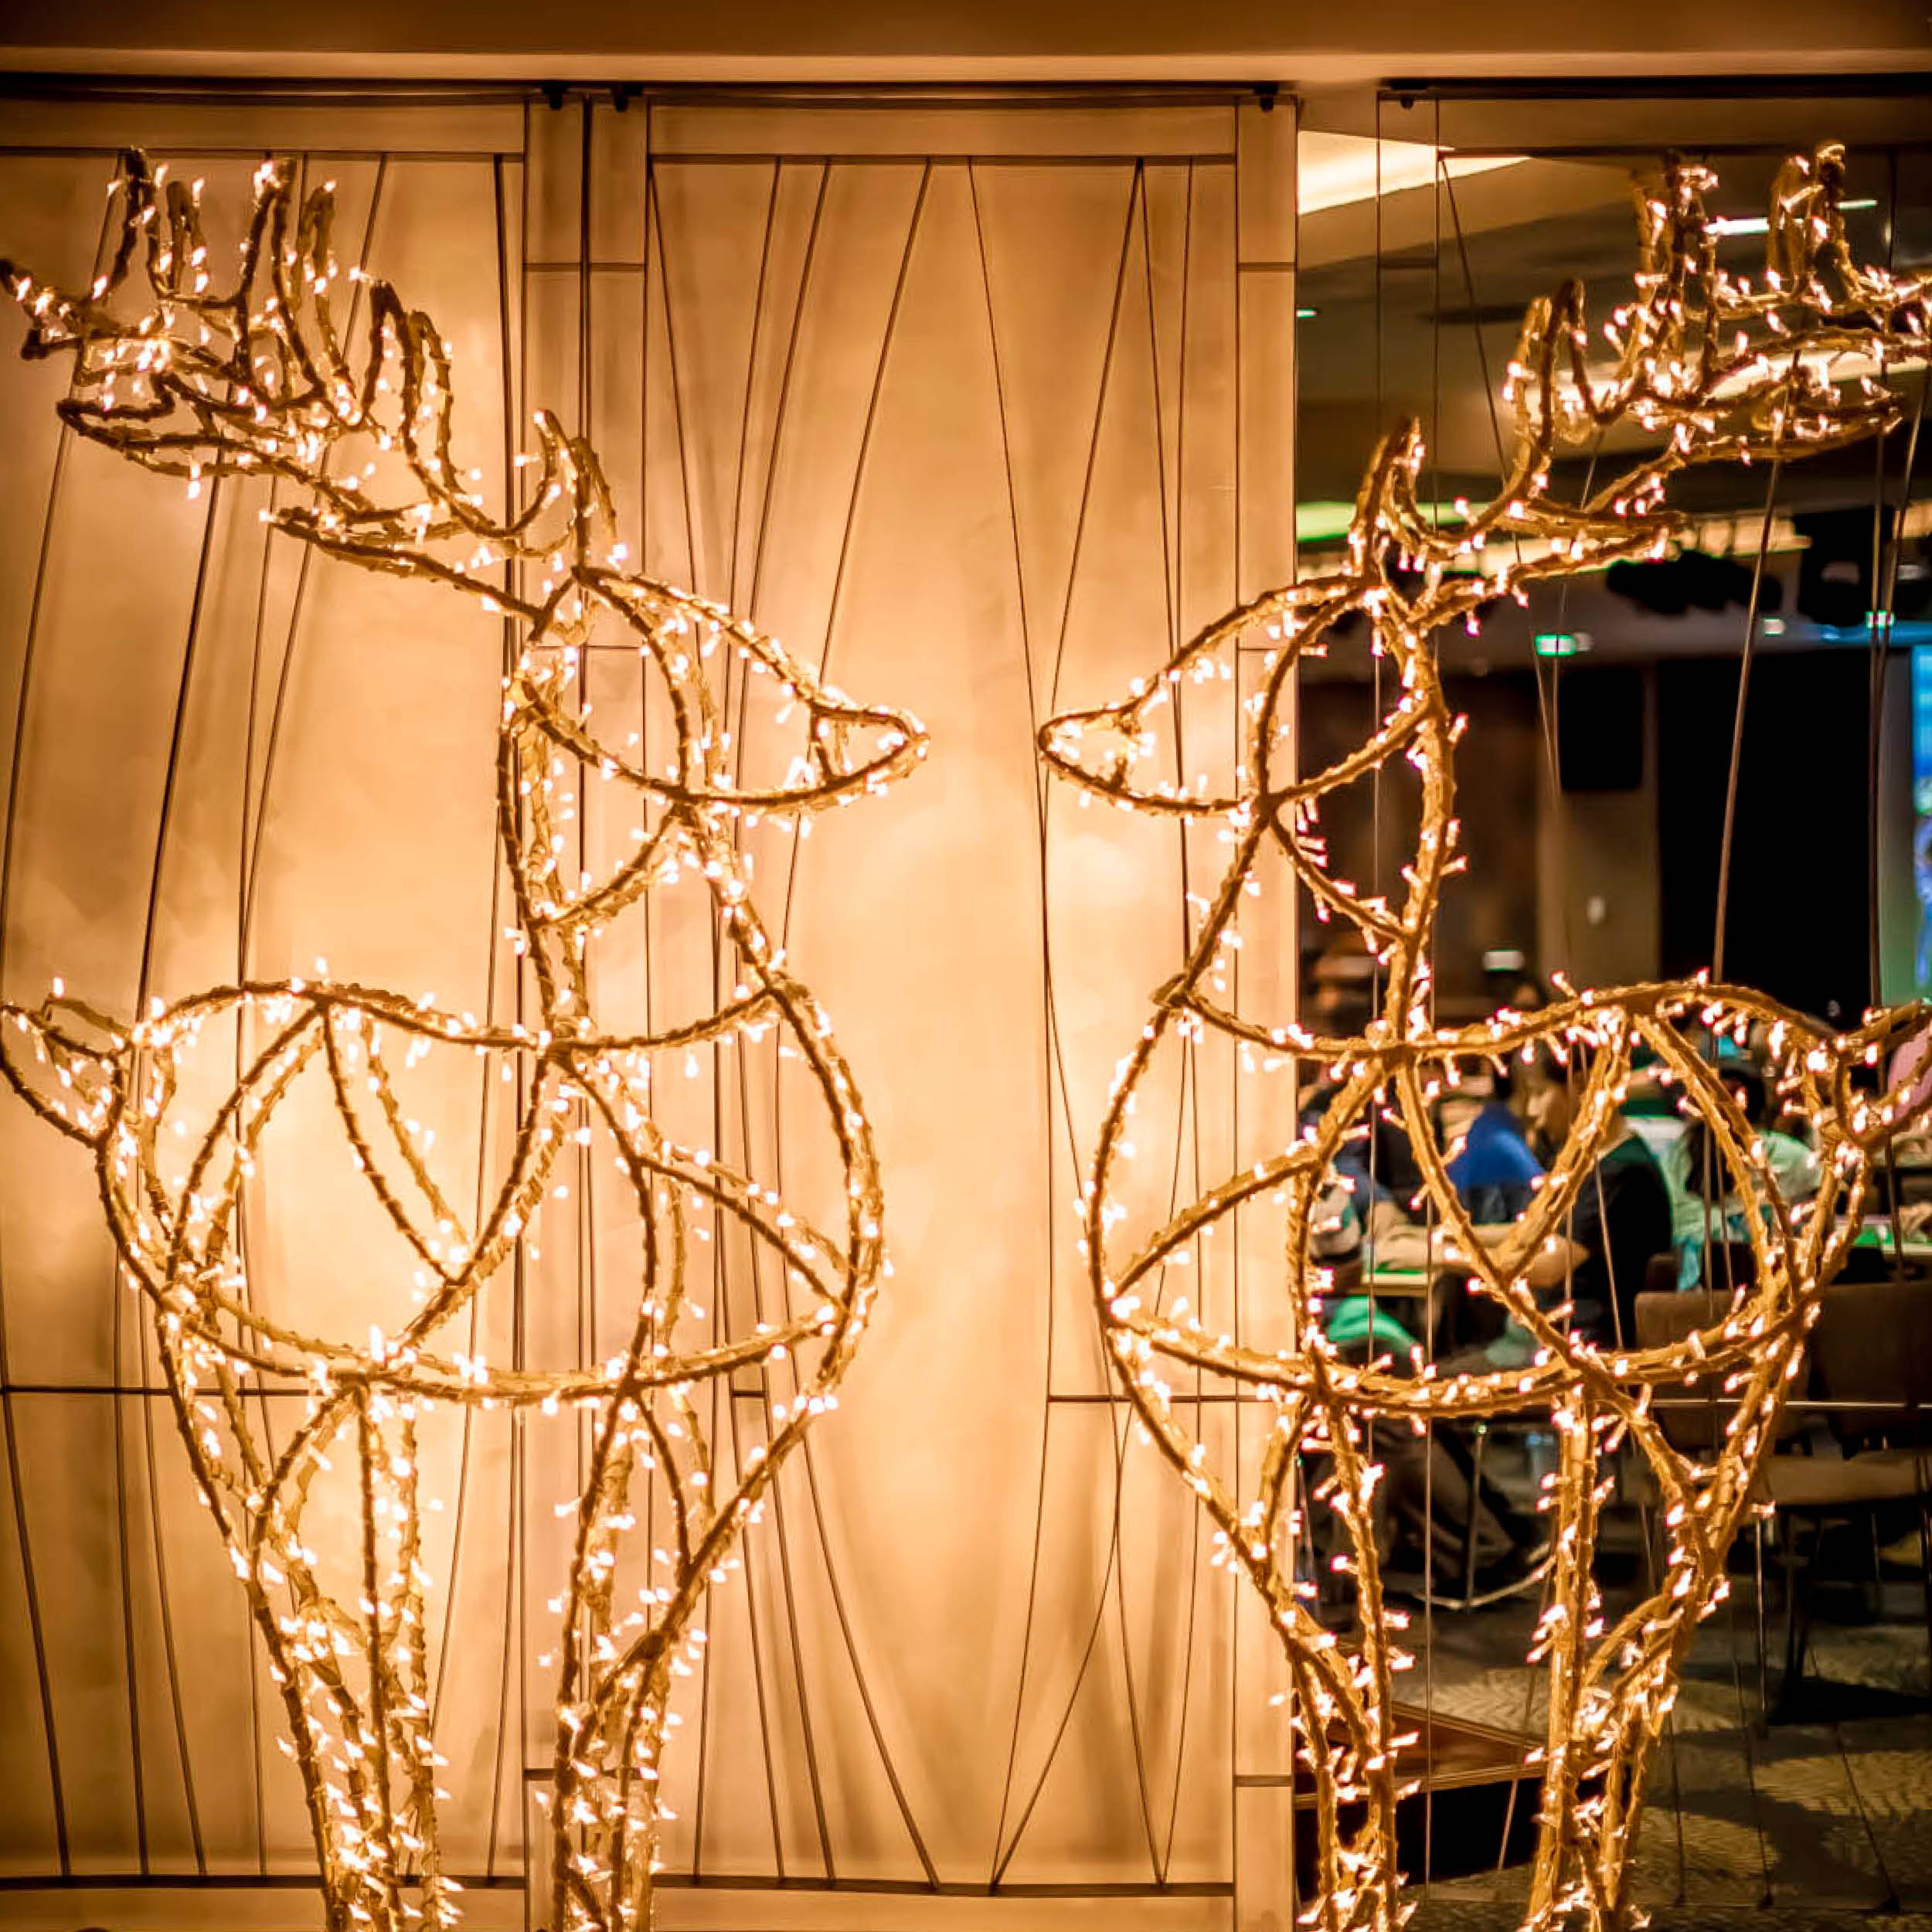 Two Christmas LED light reindeers